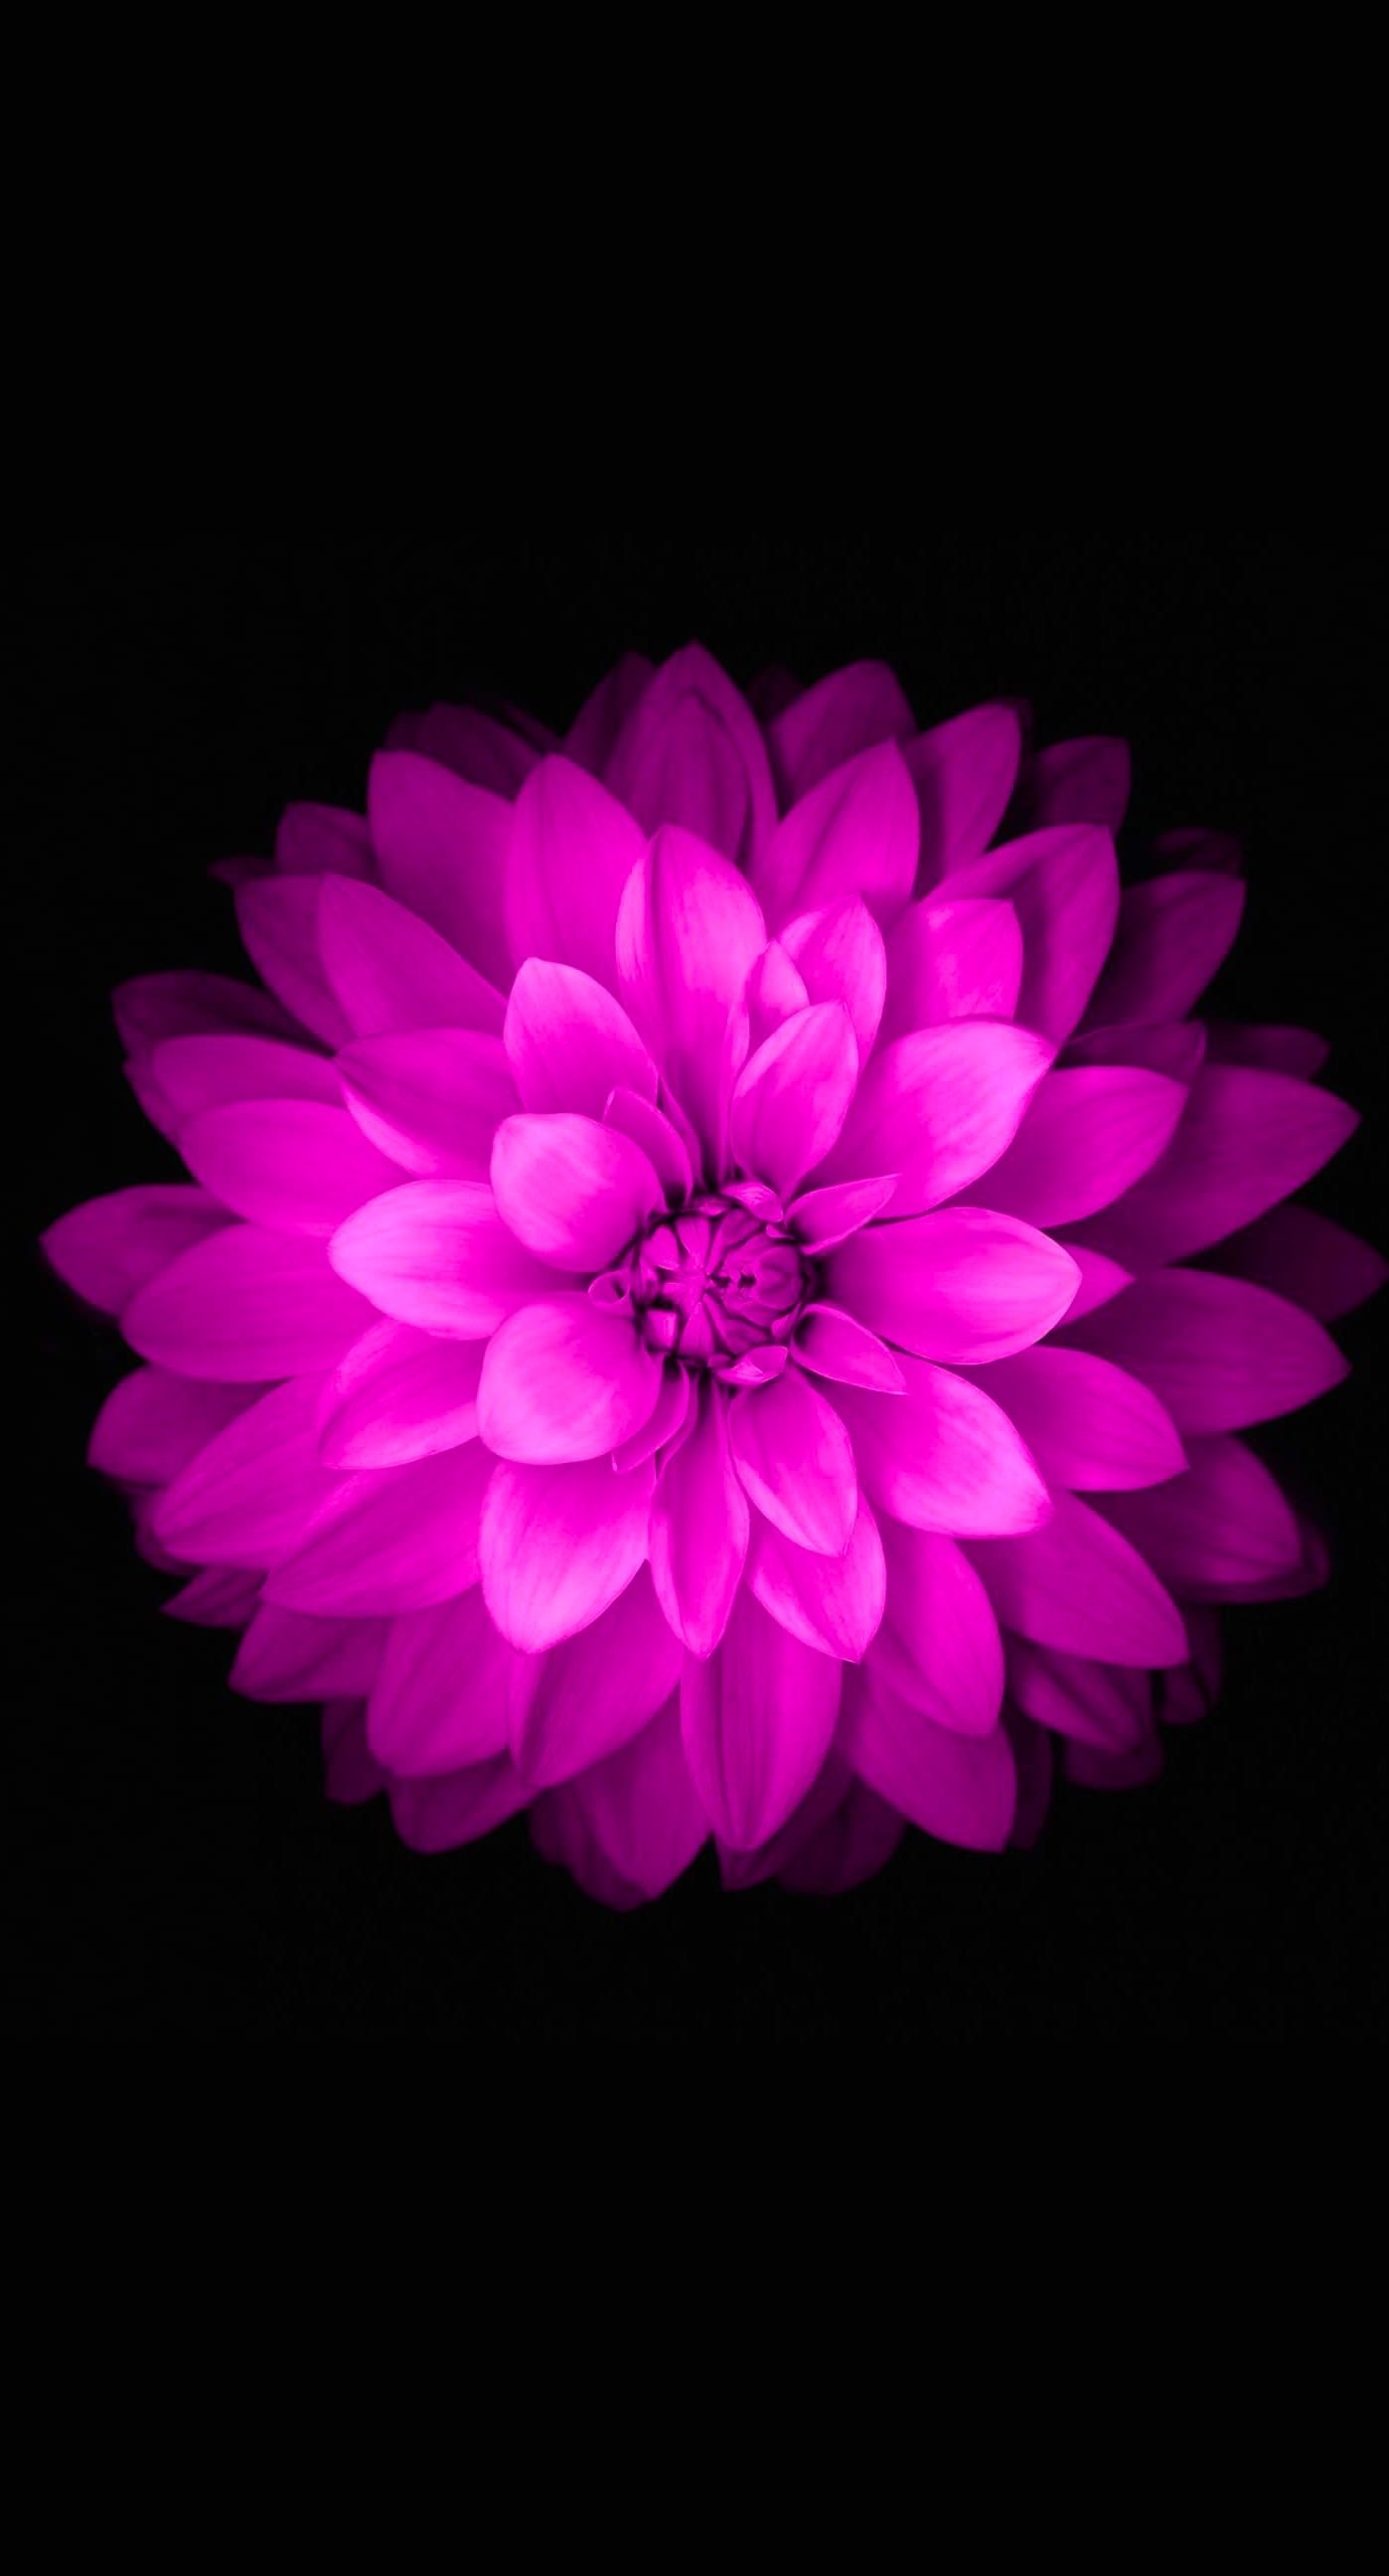 flor de loto fondo de pantalla para iphone,pétalo,rosado,violeta,flor,púrpura